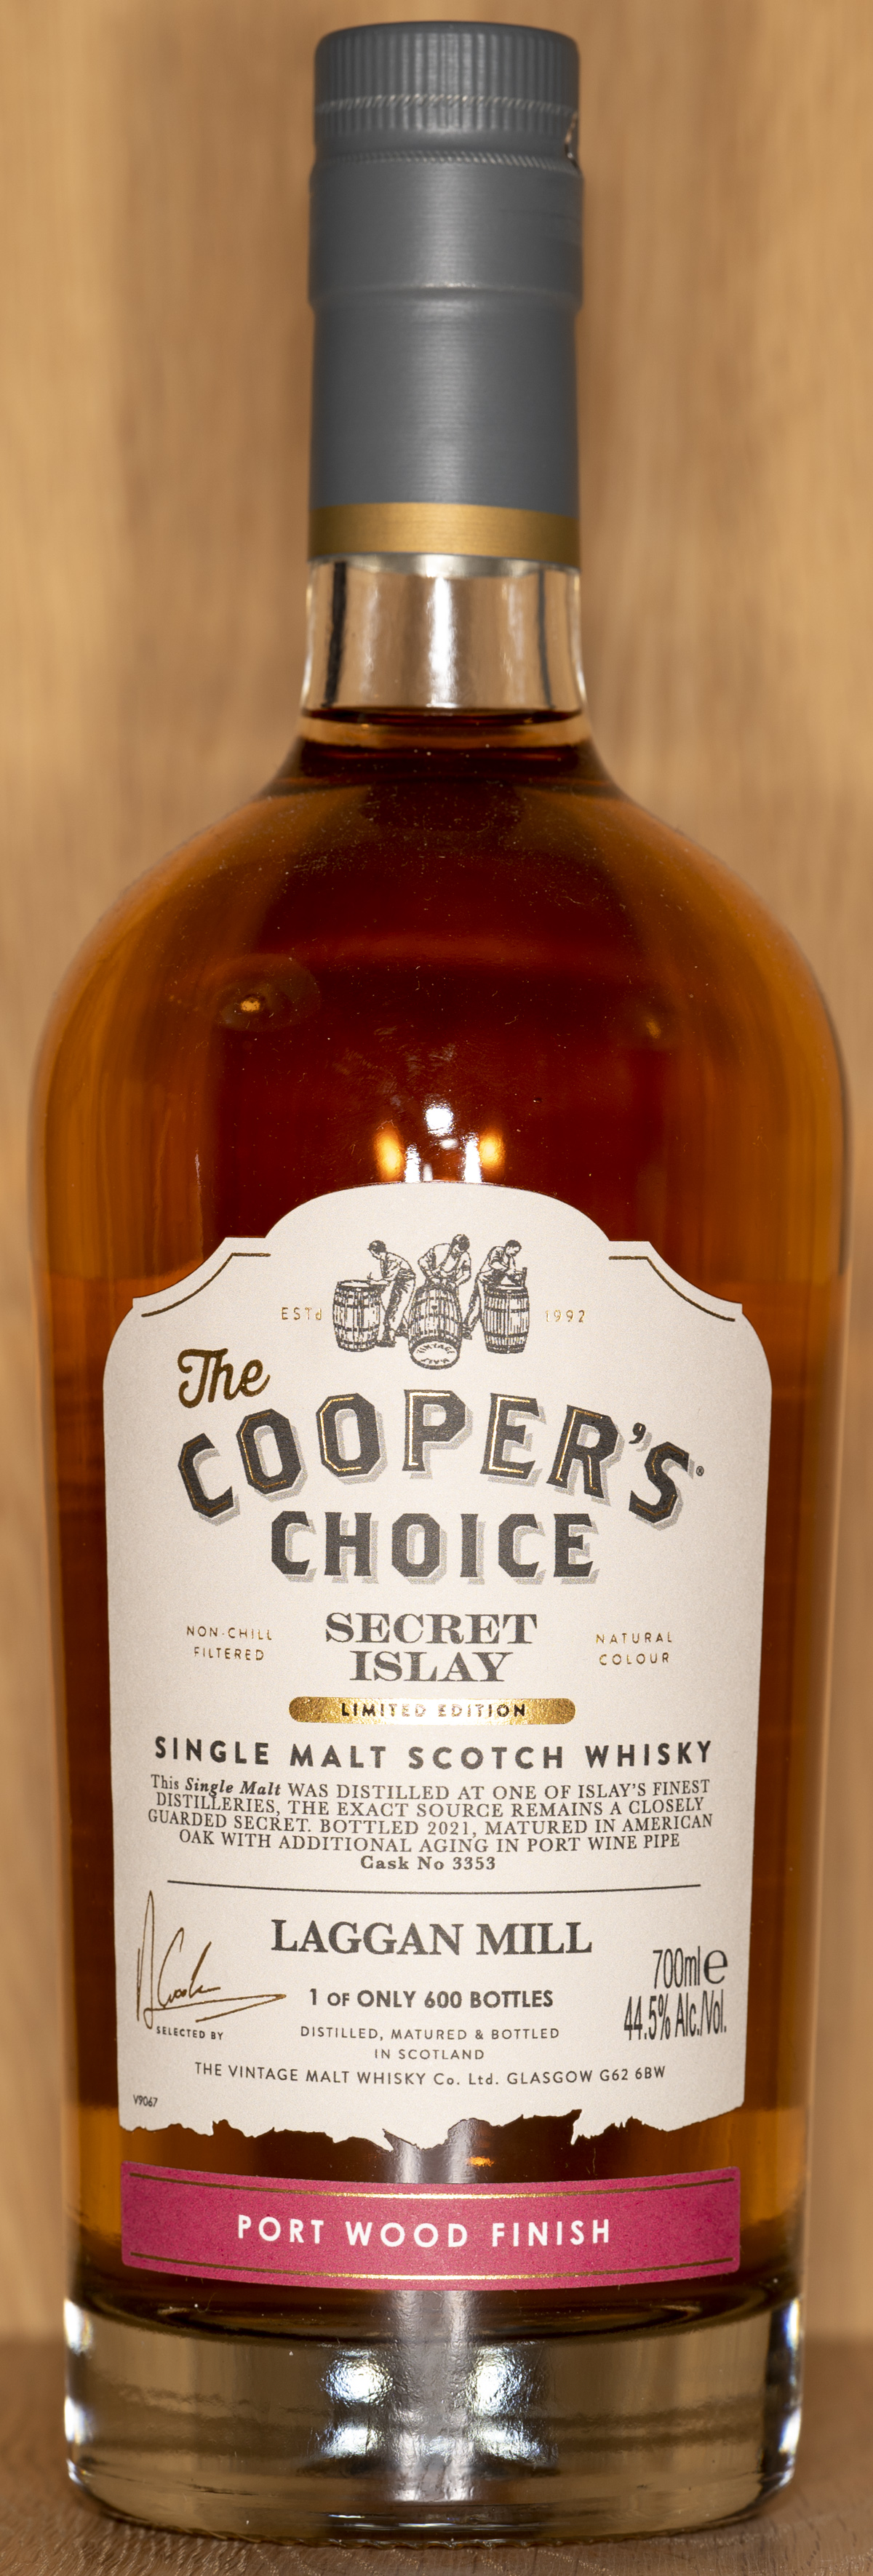 Billede: DSC_5046 - The Coopers Choice Secret Islay Laggan Mill - bottle front.jpg